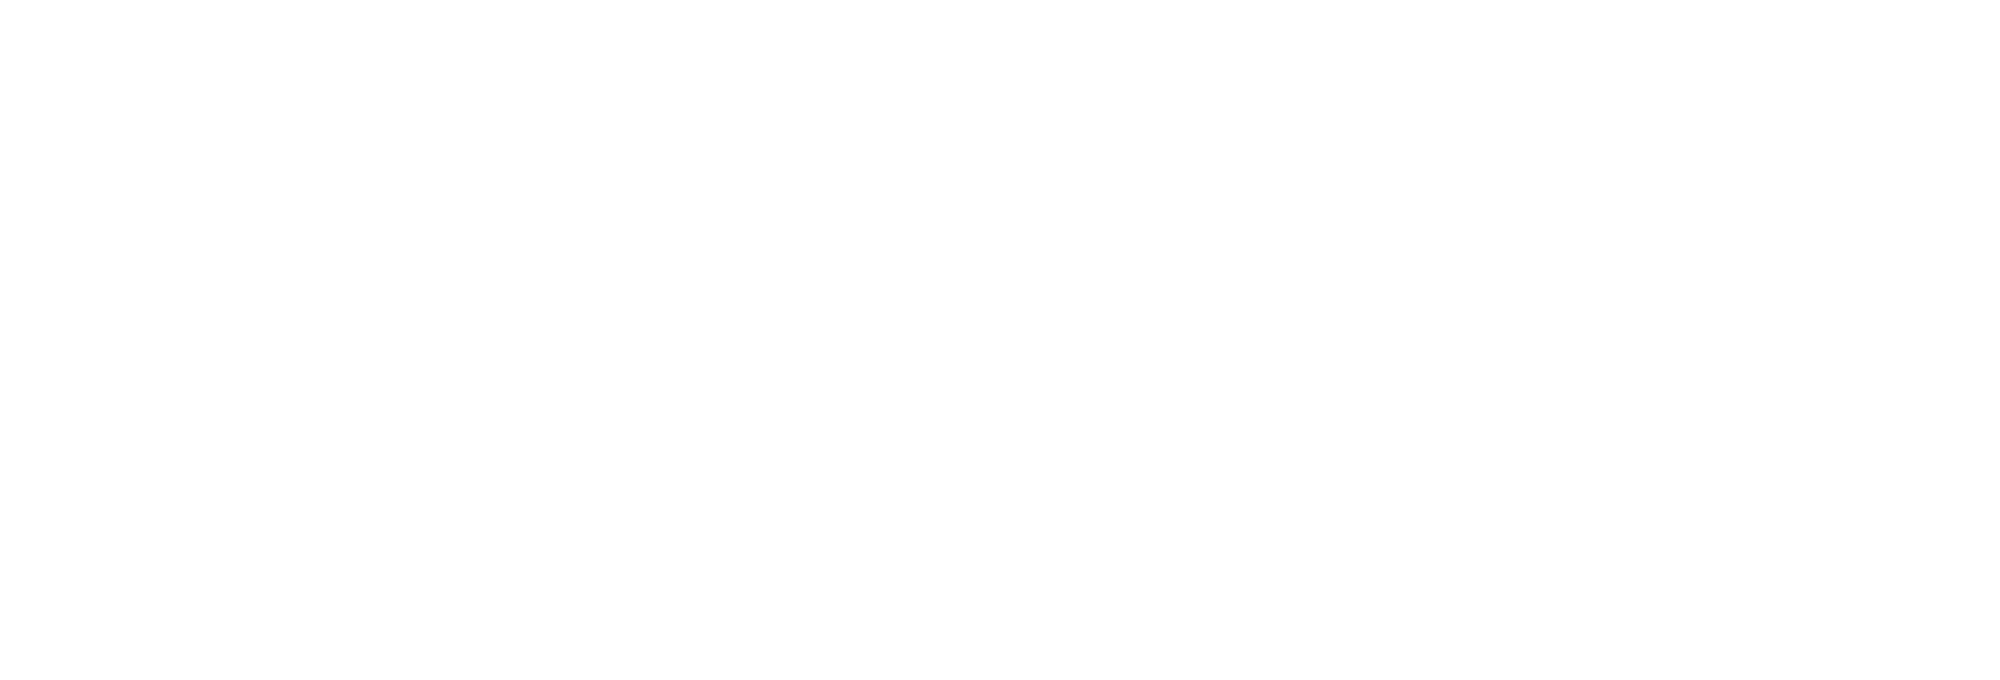 HoganBeats You Got It